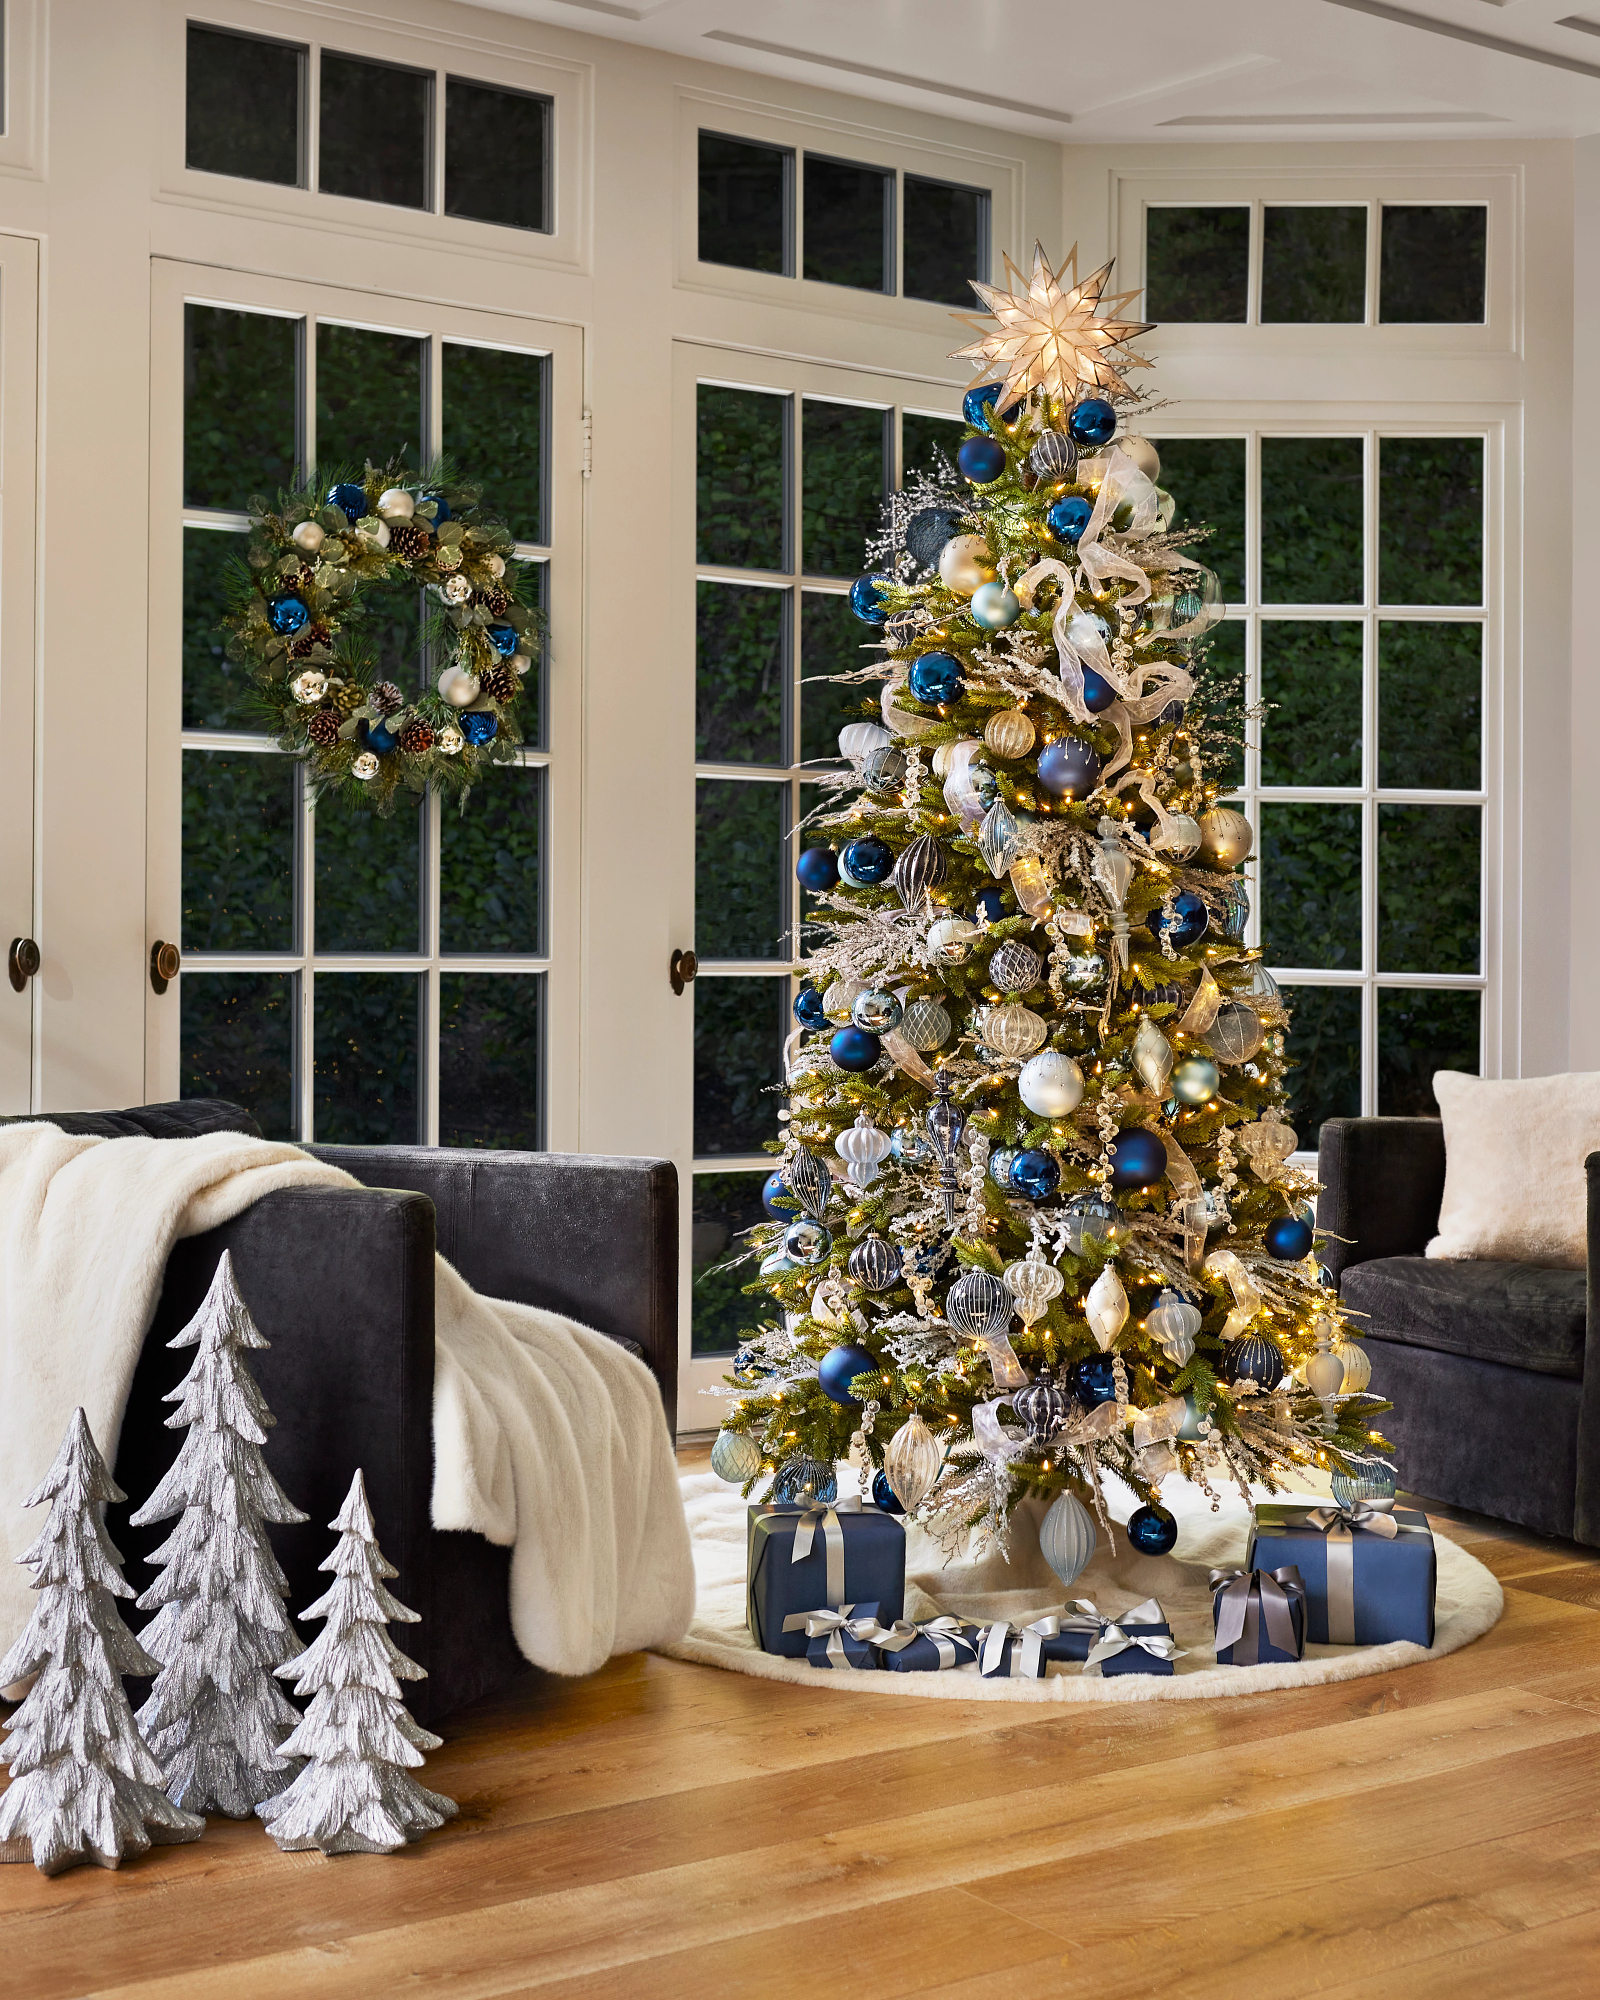 4” Black and White Stripe Ornament Ball - Cranberry Christmas Tree